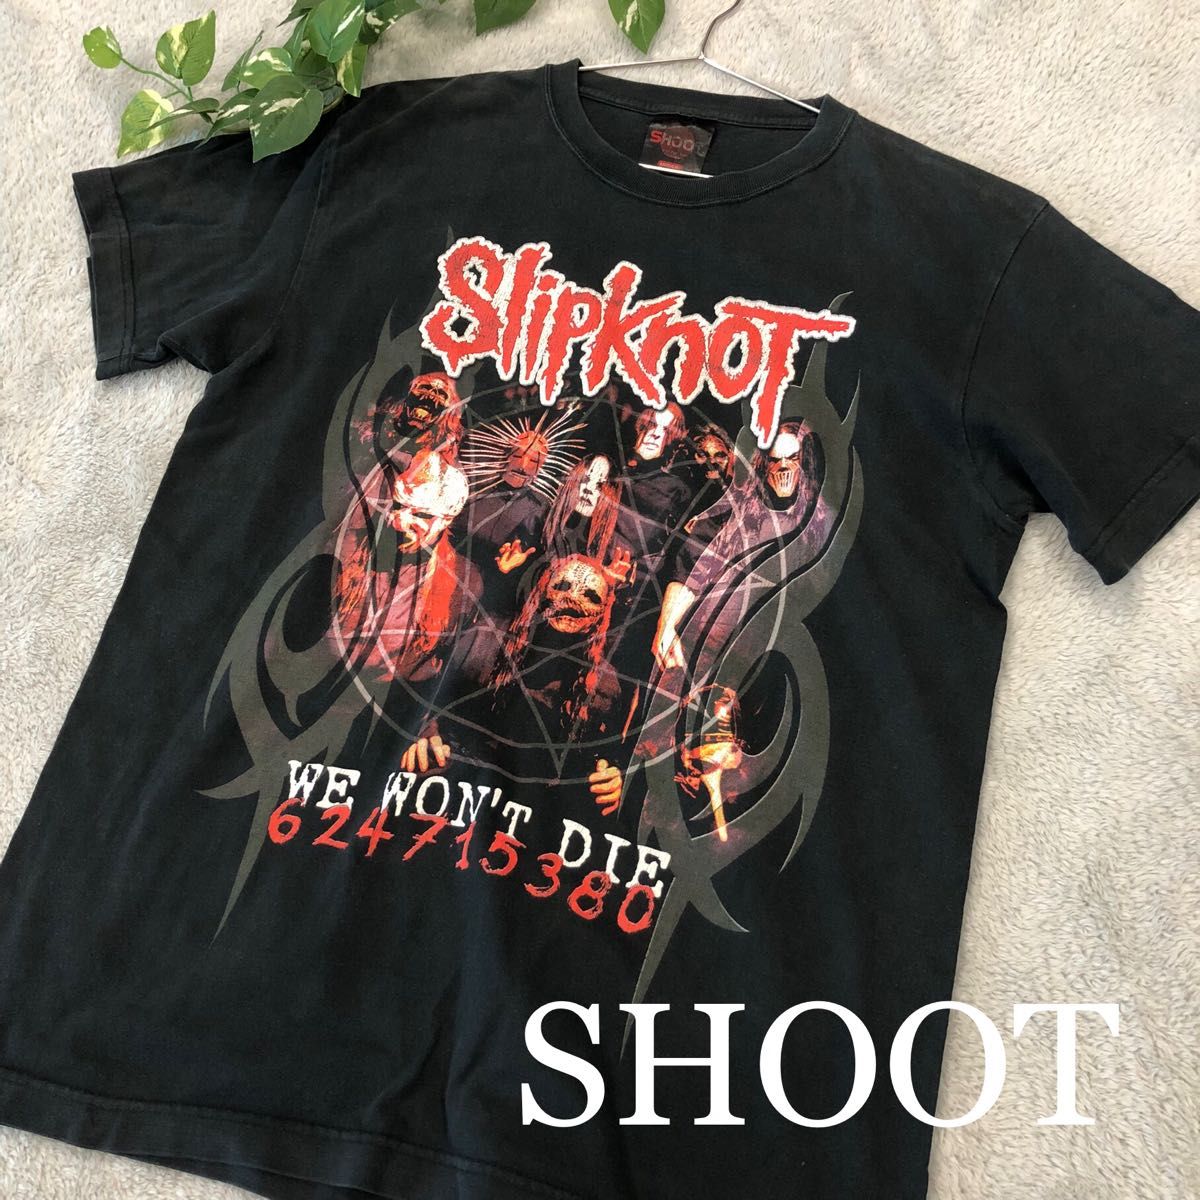 SHOOT slipknot【2004】00's we won't die バンドTシャツ M ヴィンテージ